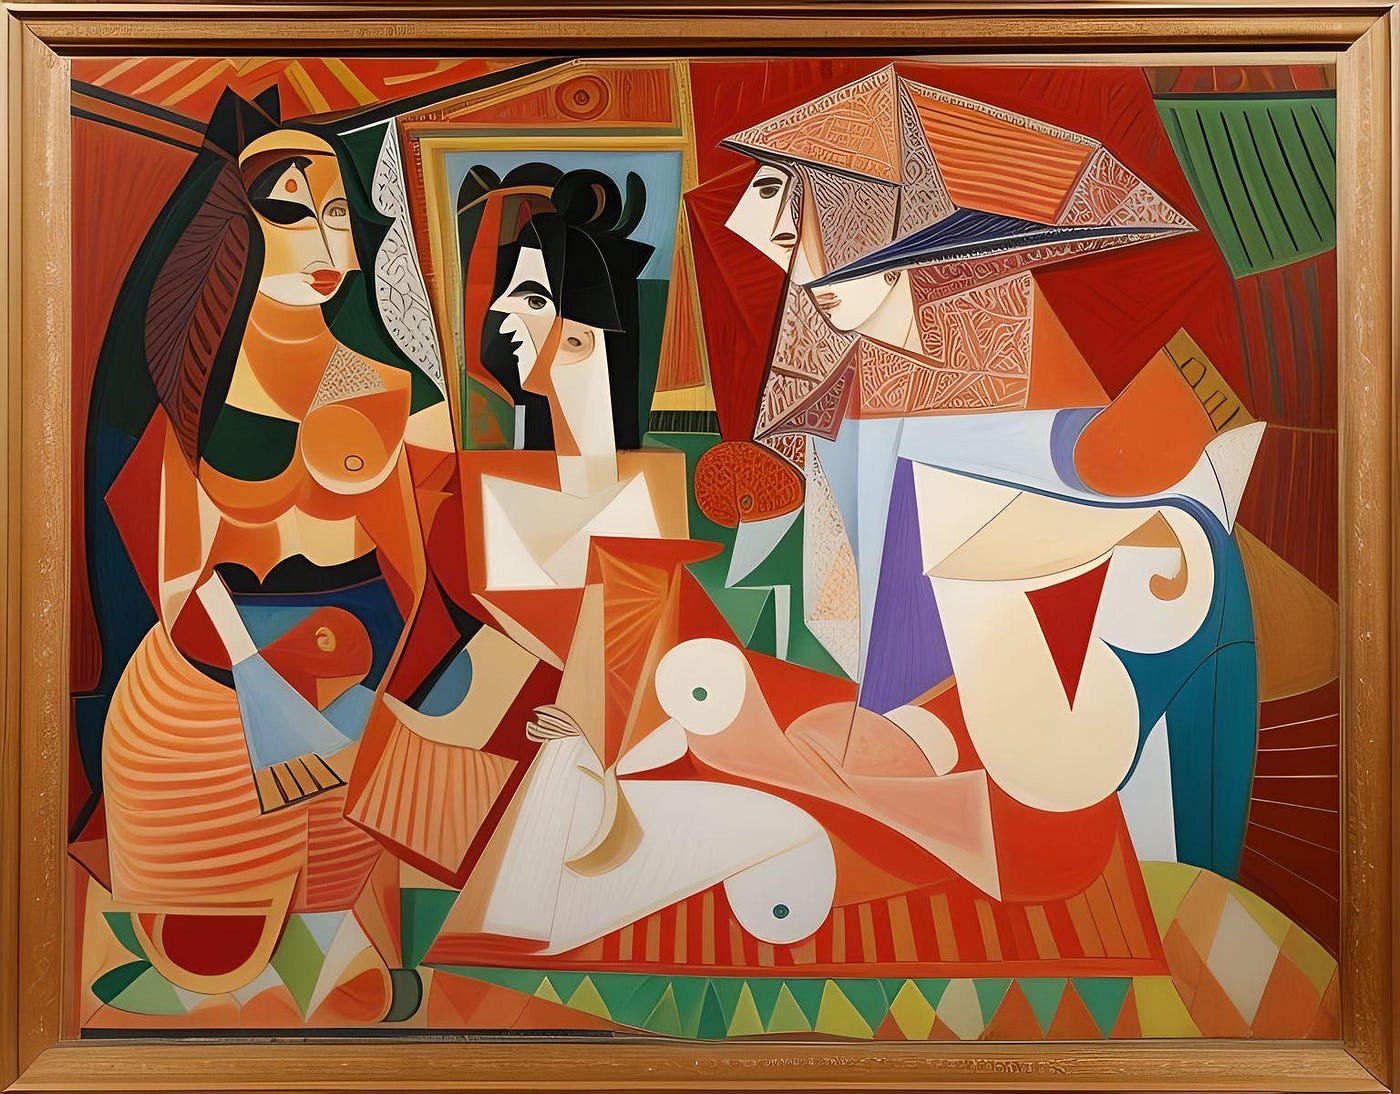 Pablo Picasso Artwork for Sale at Online Auction